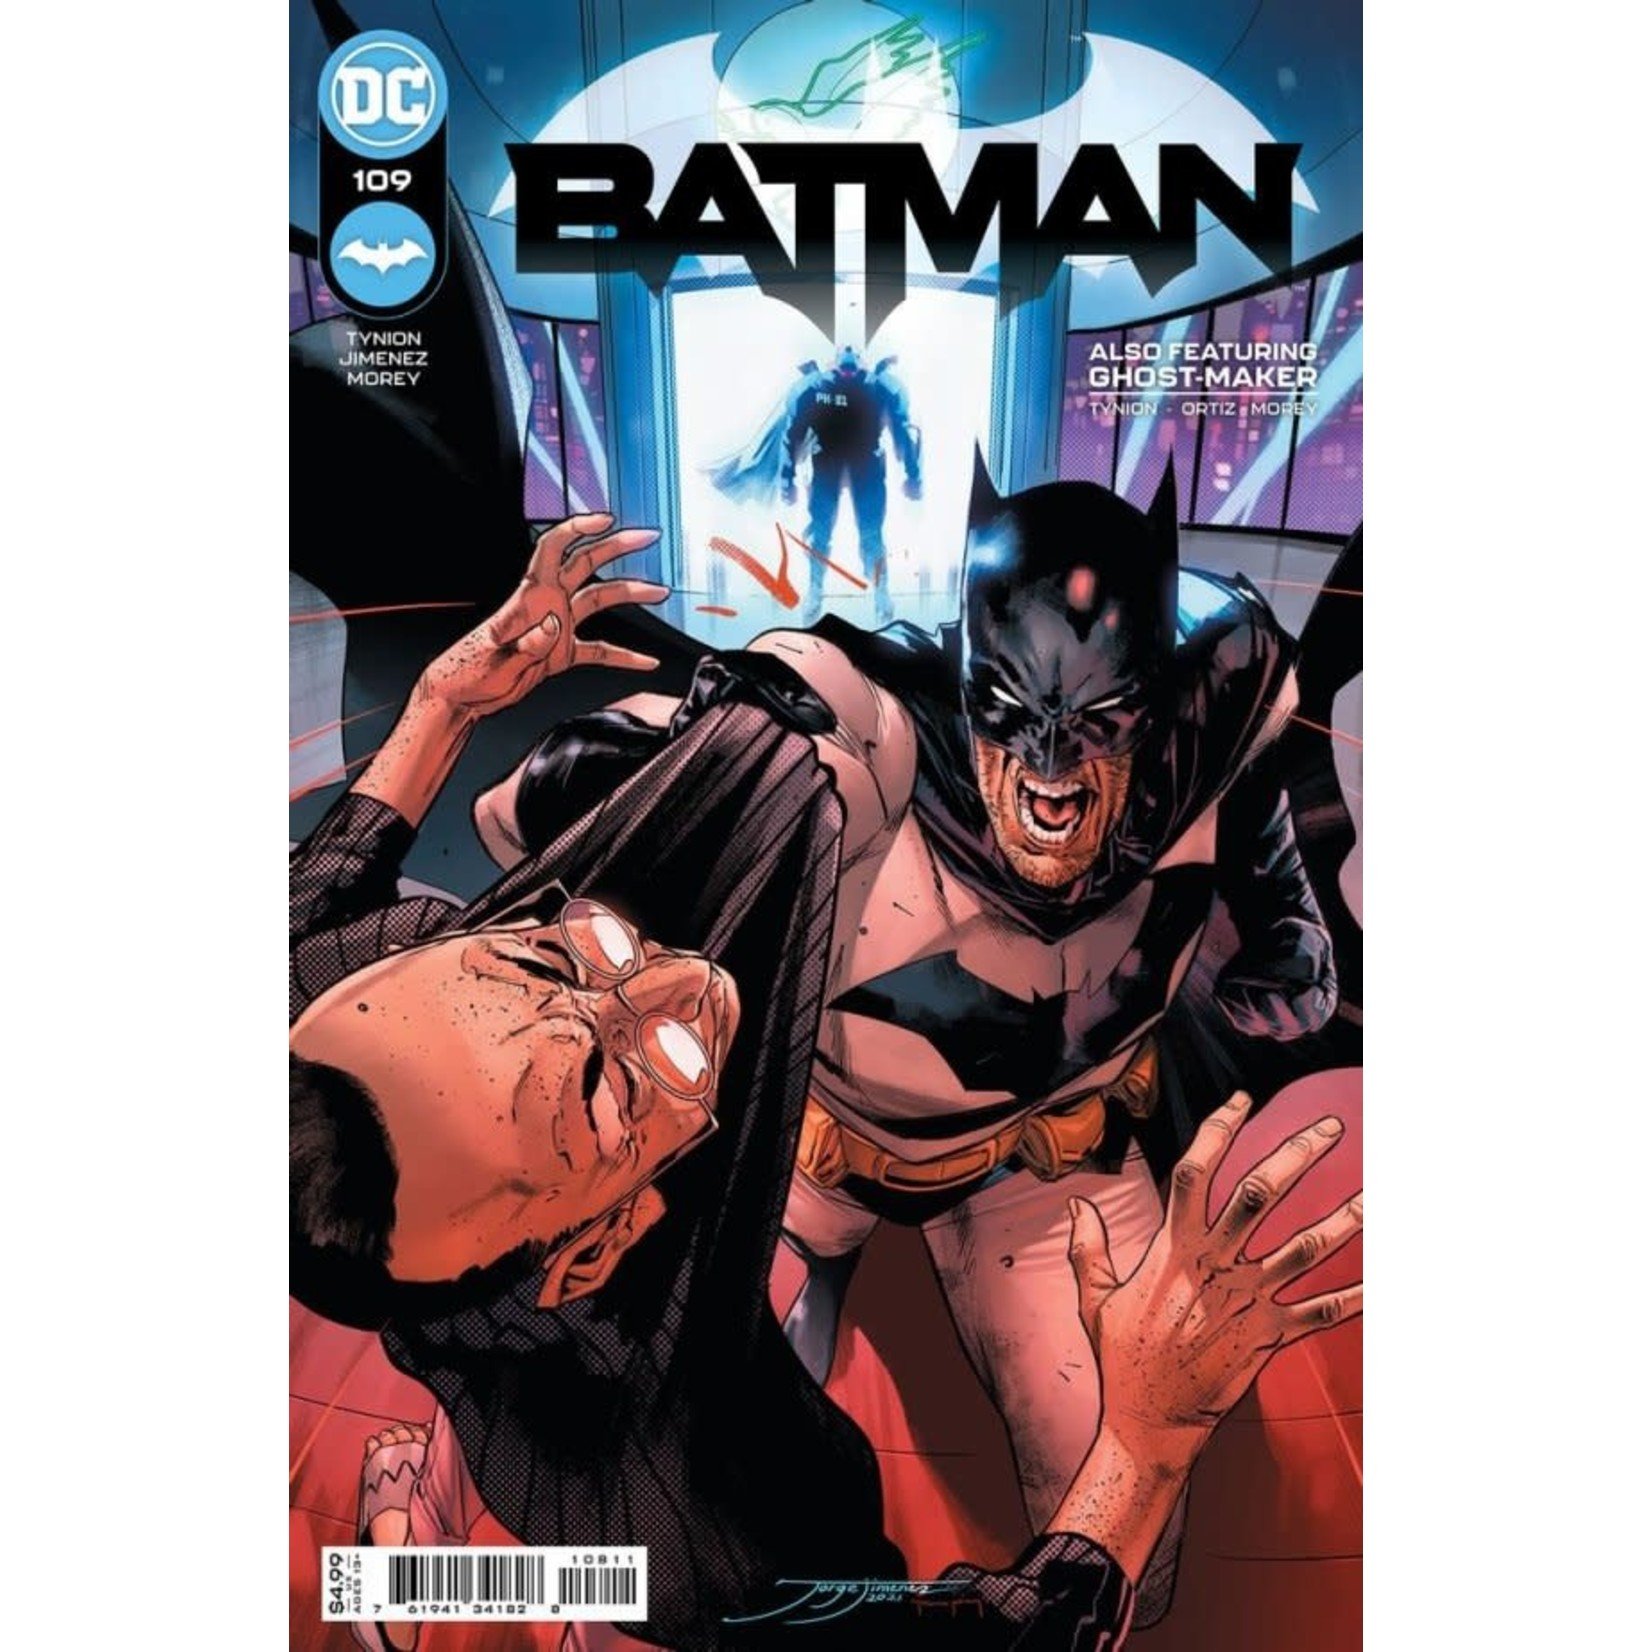 DC Comics BATMAN #109 CVR A JORGE JIMINEZ